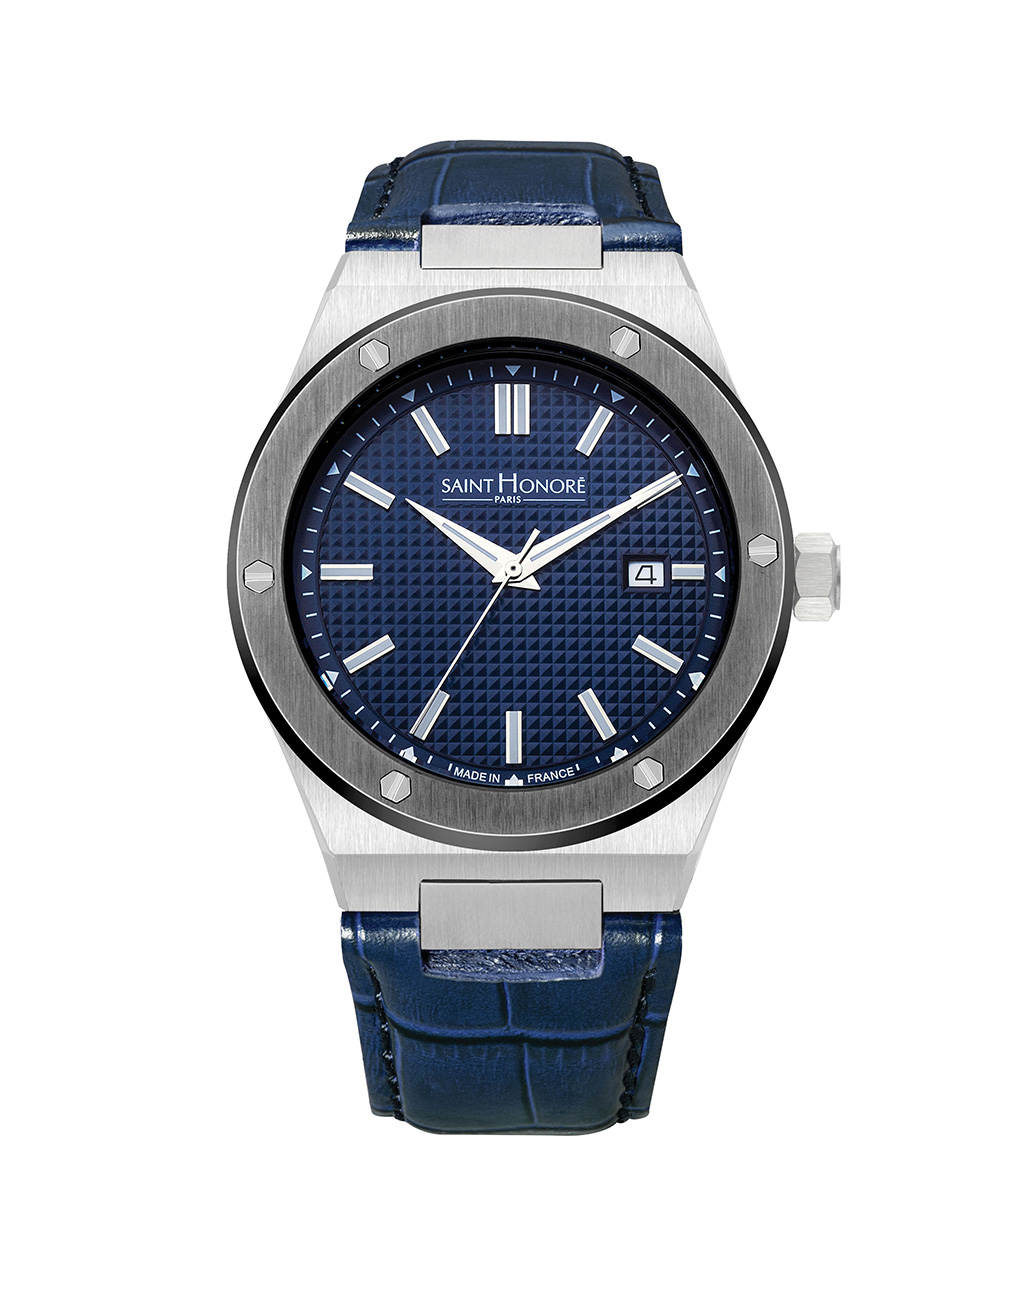 HAUSSMAN II Men's watch - stainless steel, blue dial, blue leather strap